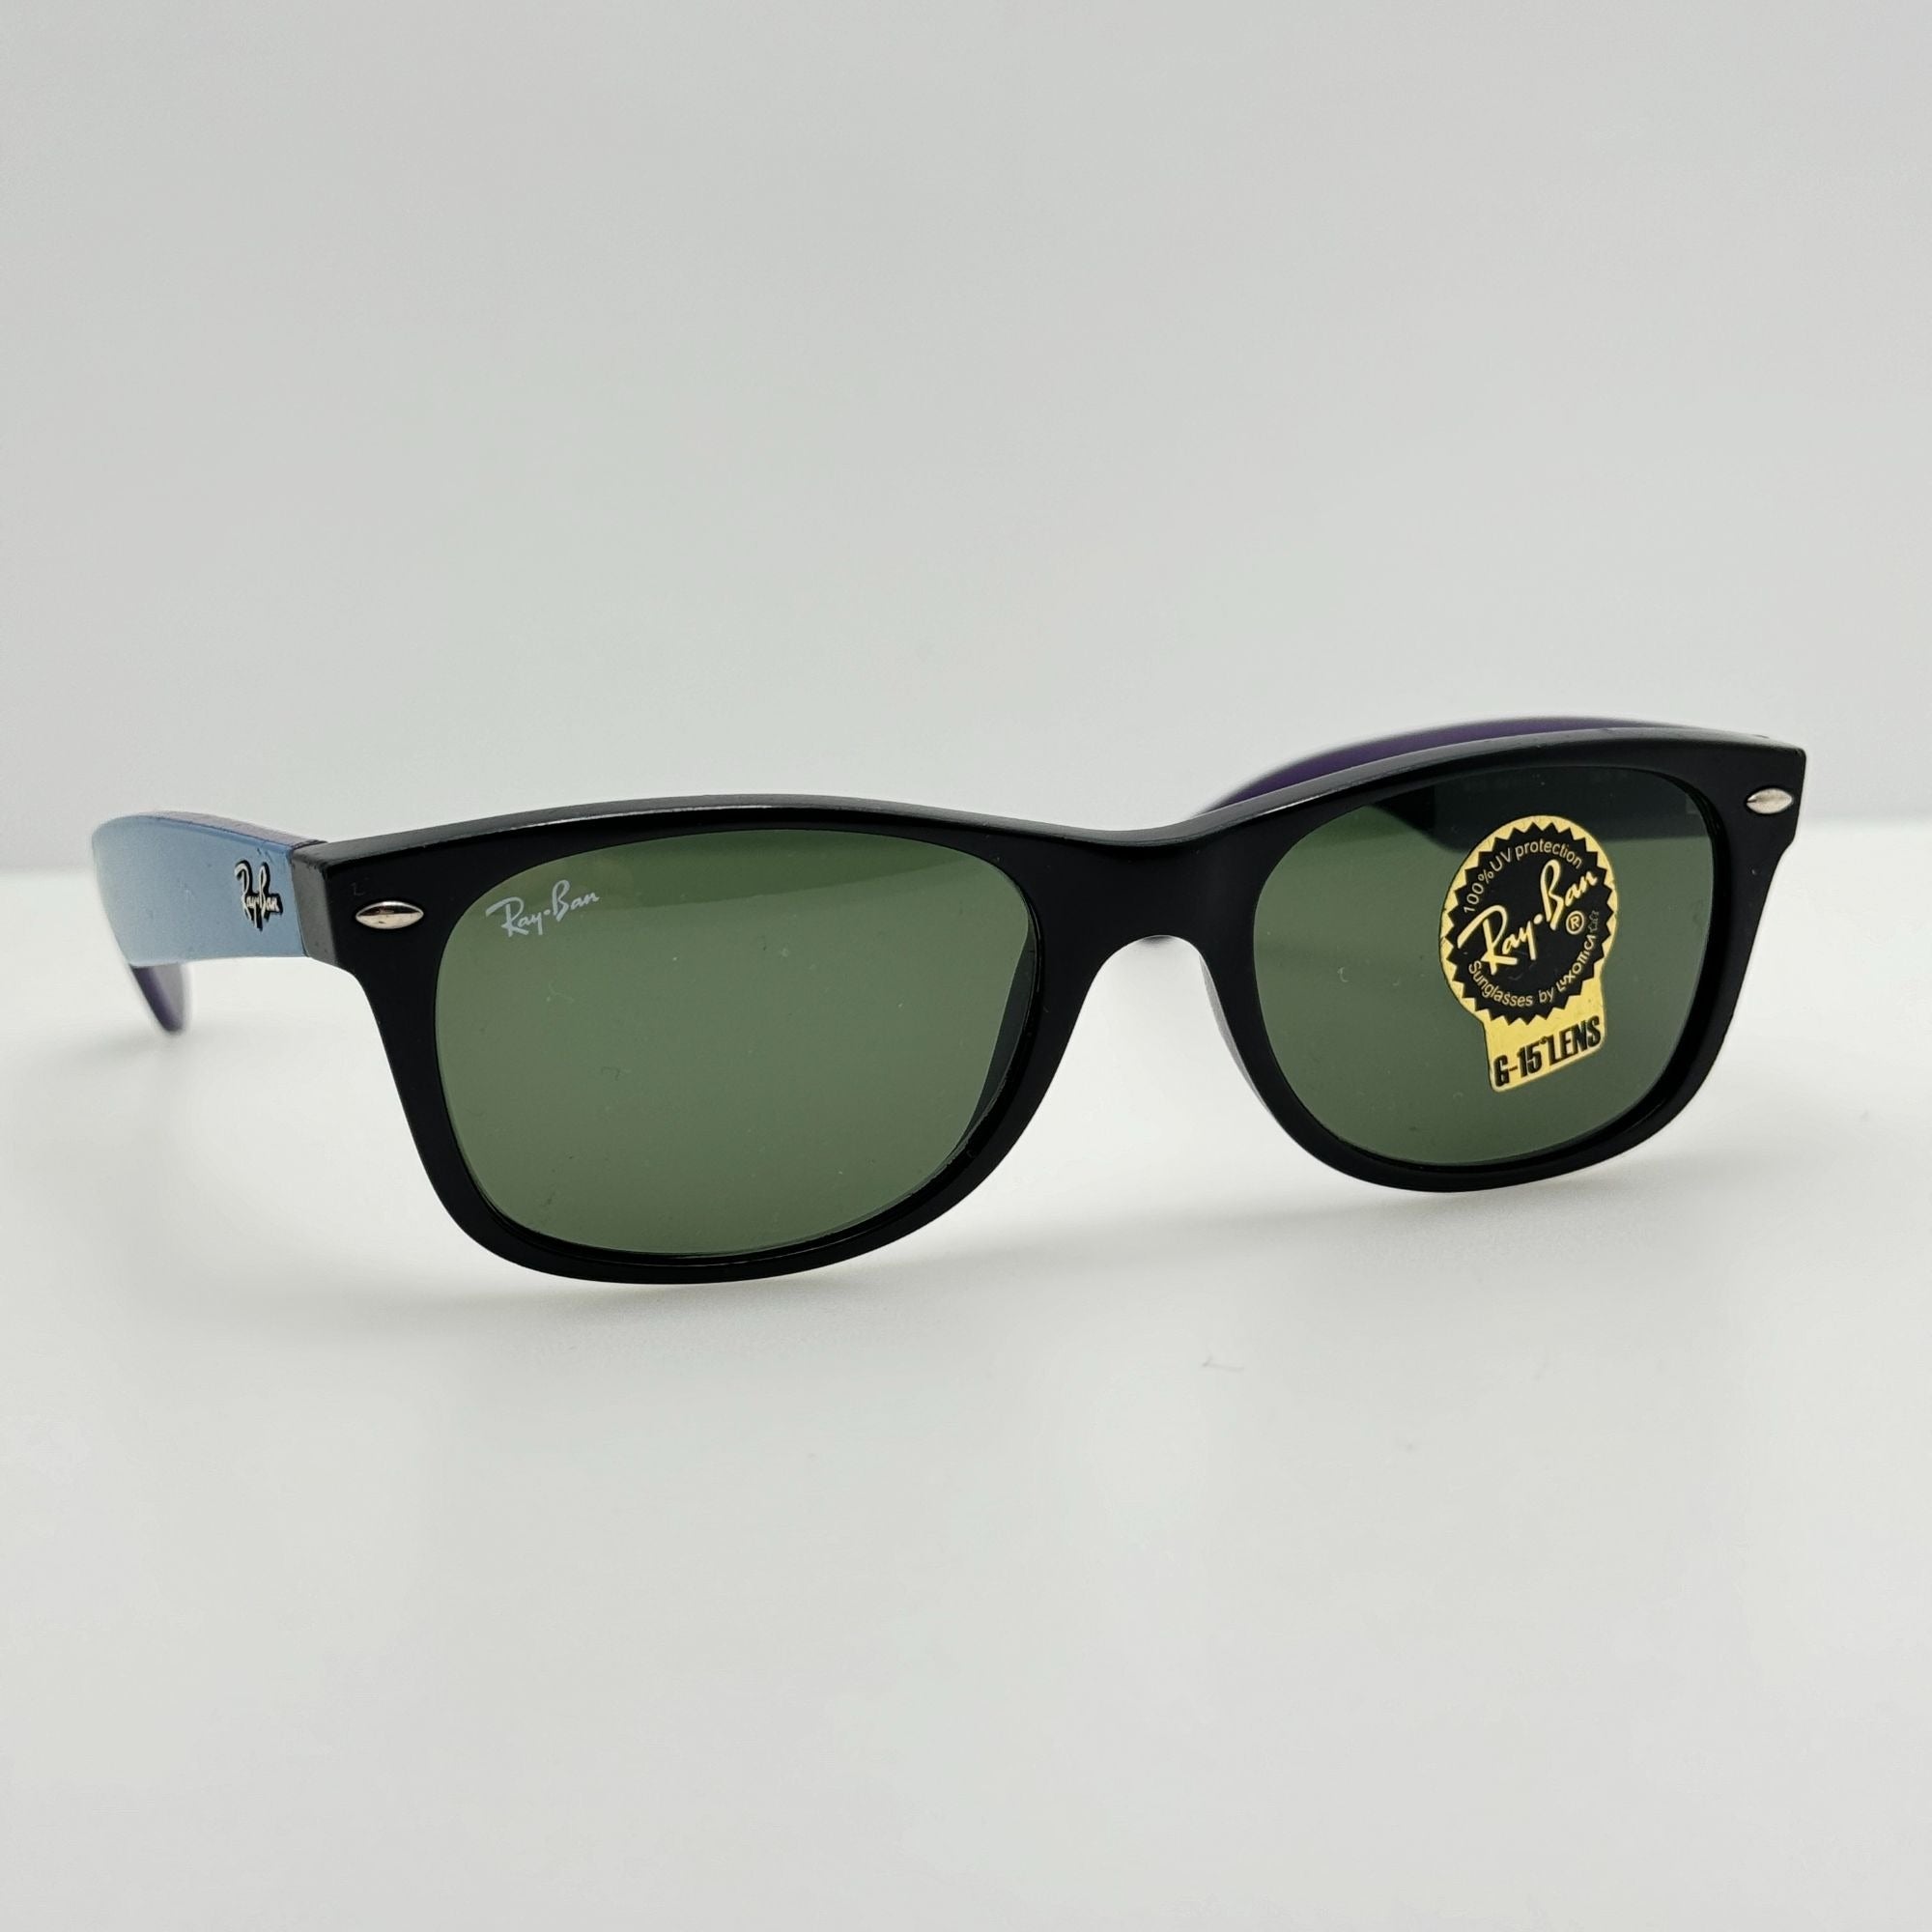 Ray-Ban-Sunglasses-RB-2132-“New-Wayfarer”-6183/71-52-18-Italy-Sunglasses